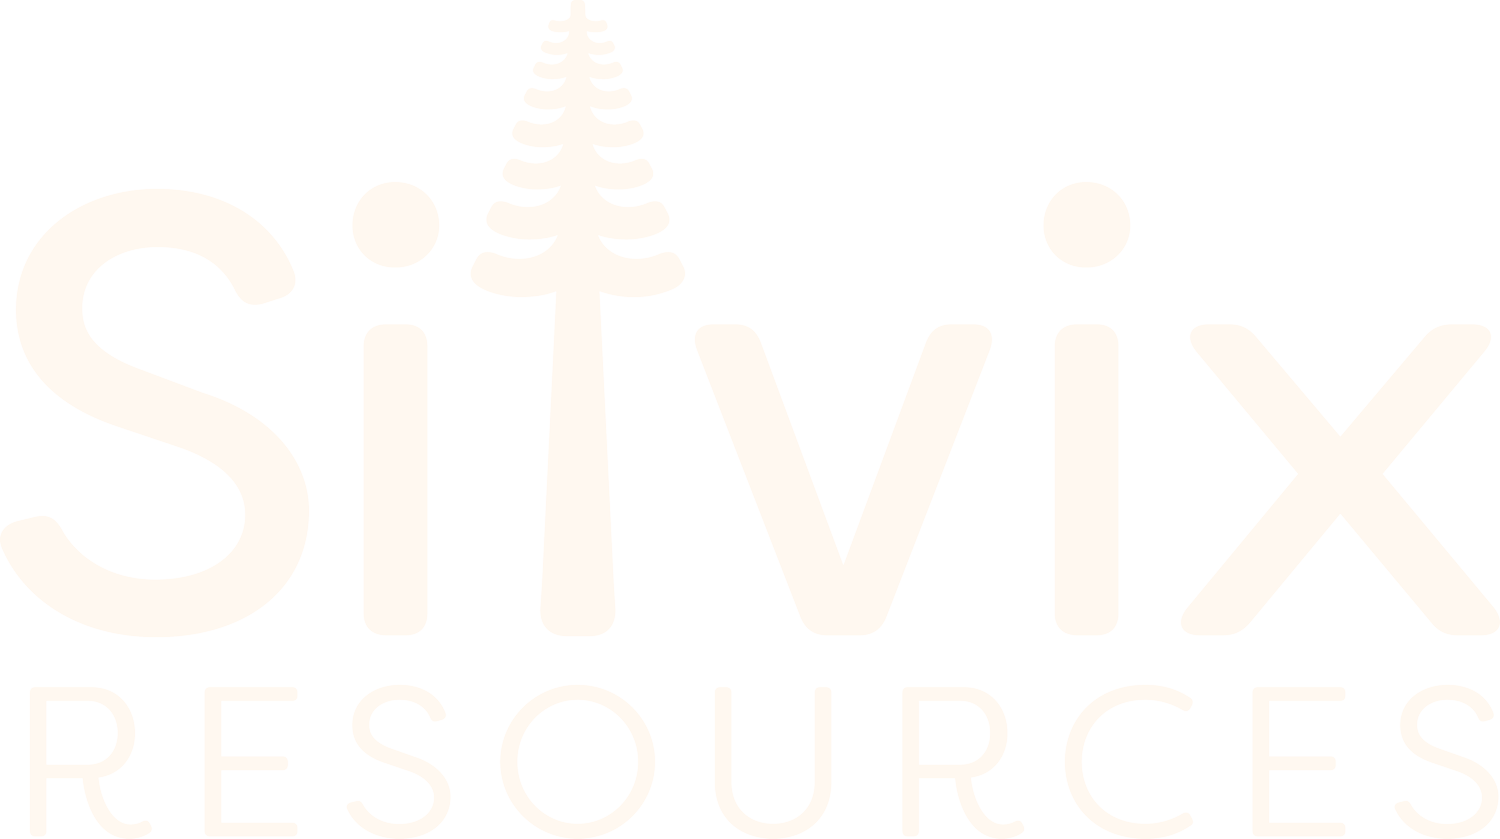 Silvix Resources